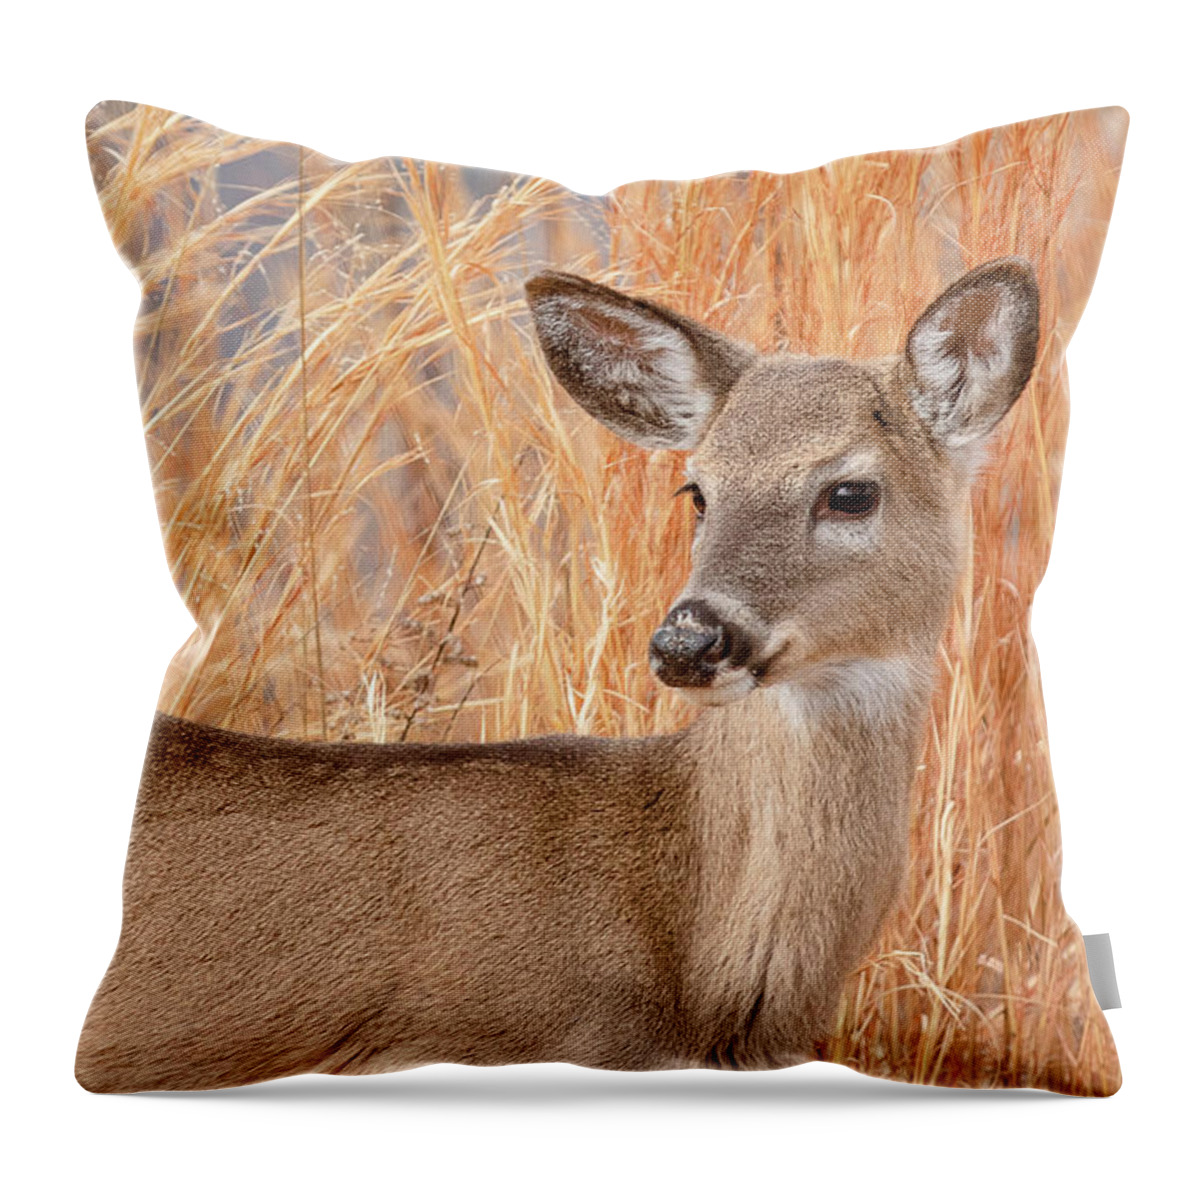 Animal Throw Pillow featuring the photograph Young Deer in Tall Grass Closeup by Joni Eskridge